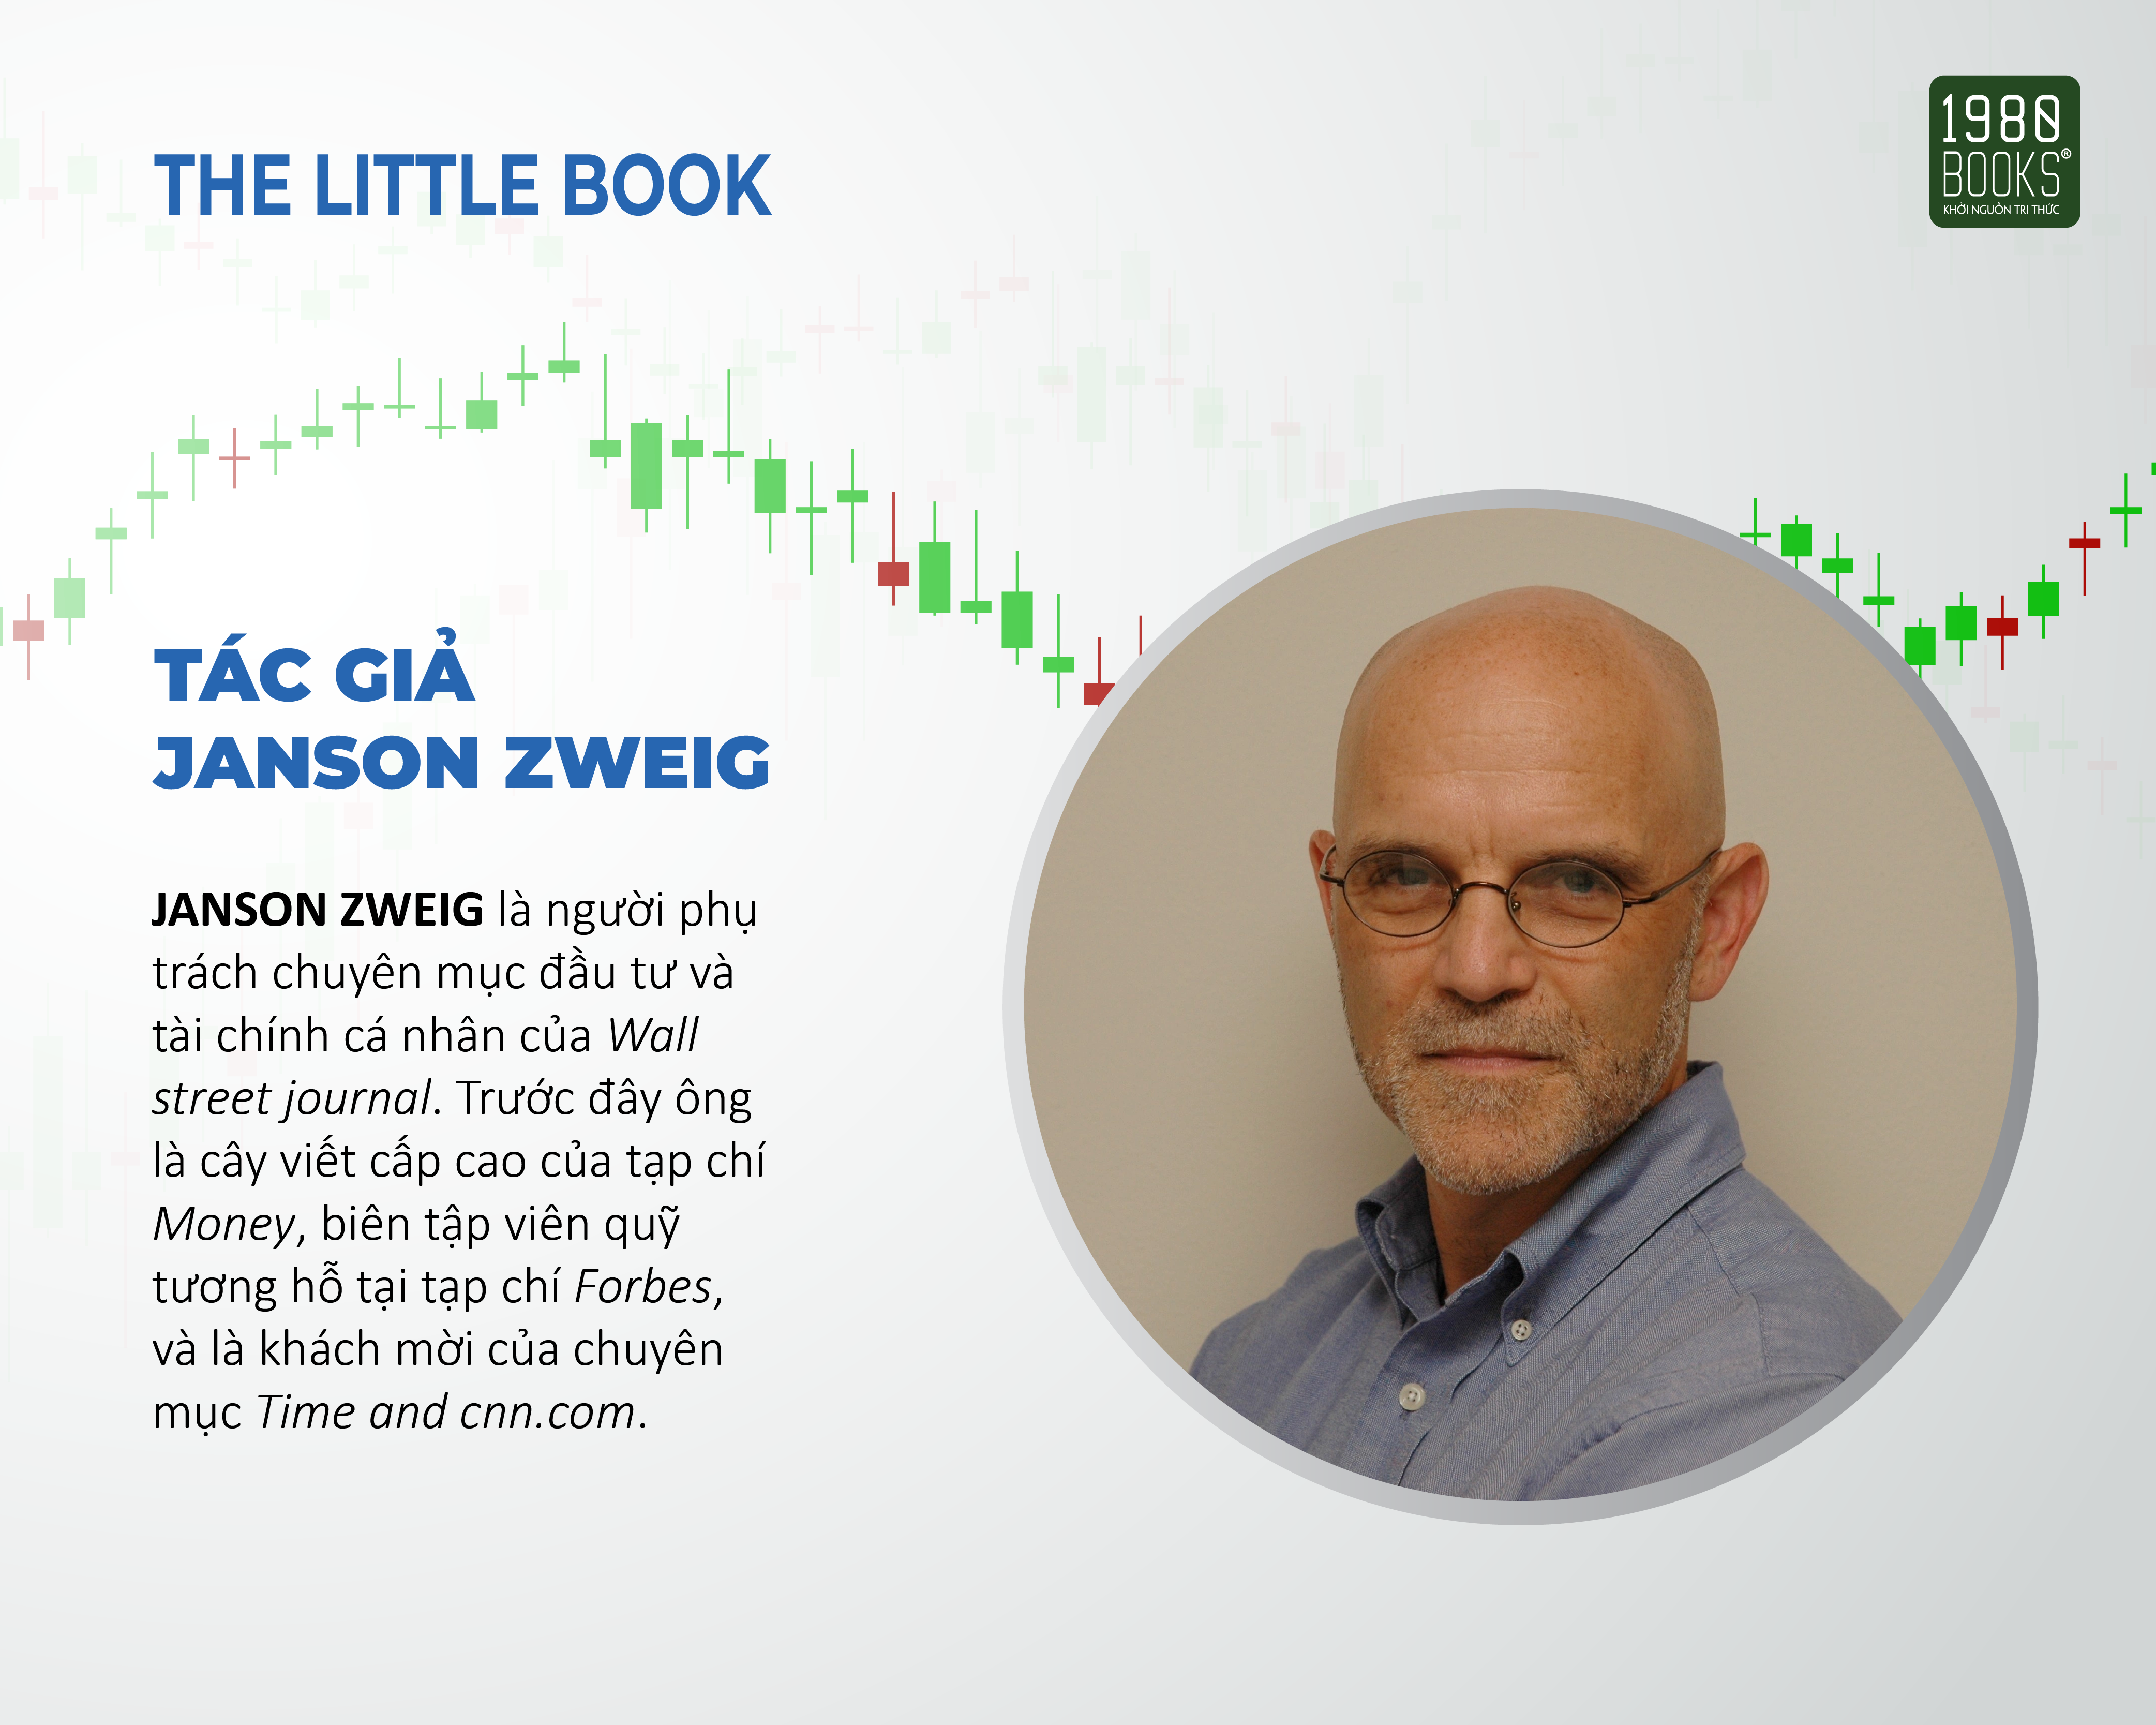 The Little Book: Tâm lý trong đầu tư chứng khoán - Jason Zweig (1980BOOKS HCM)